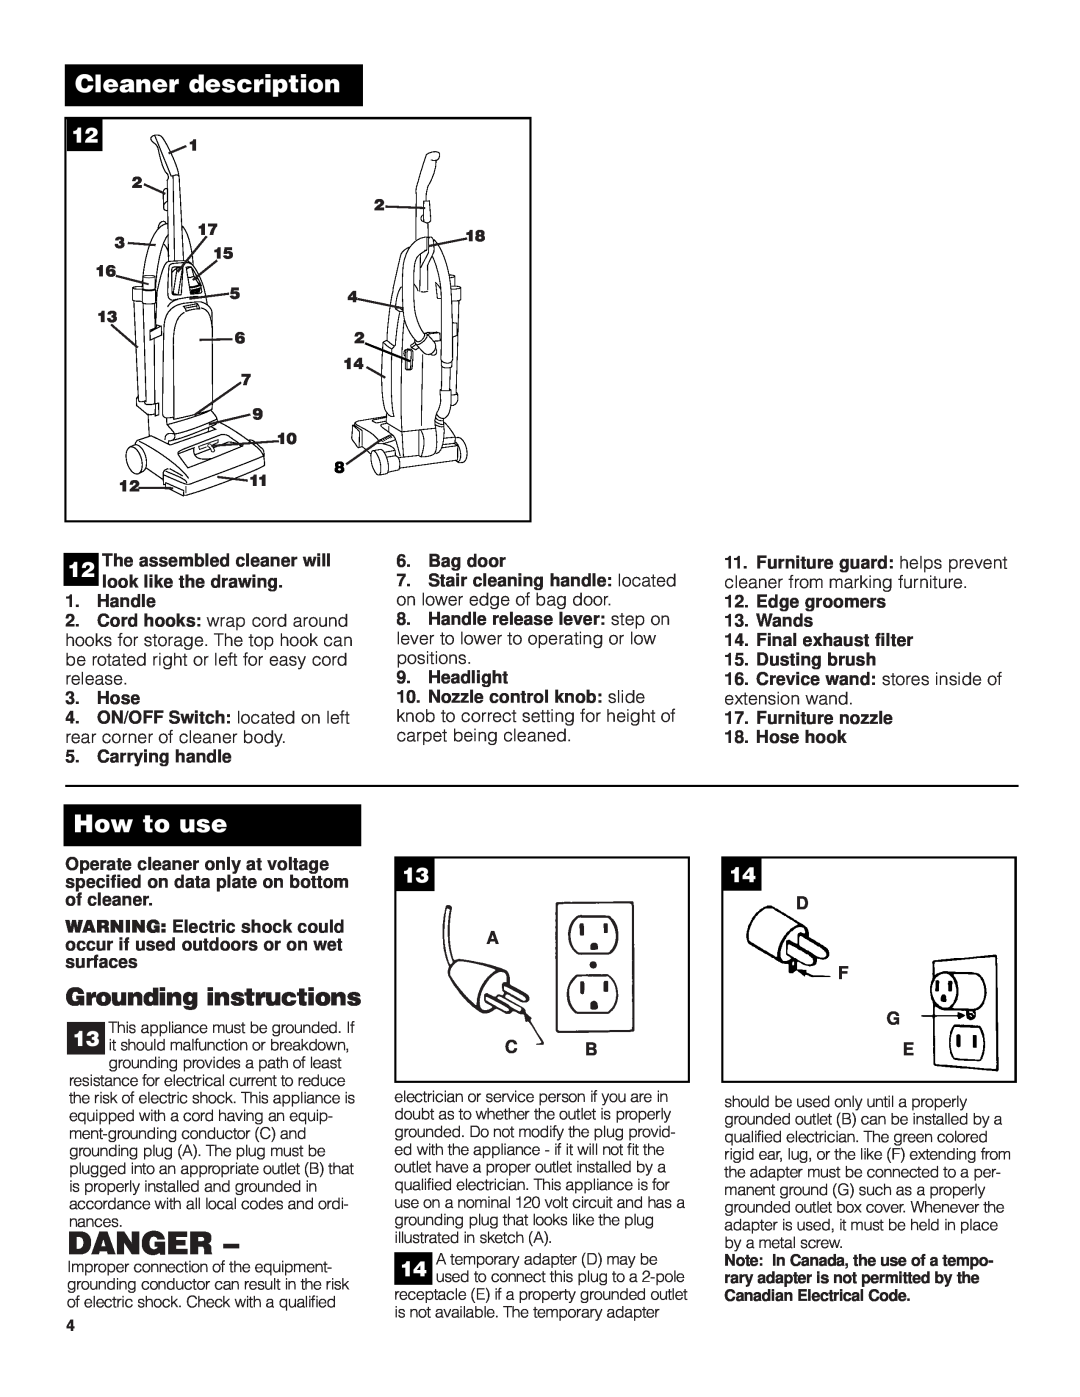 SSS AF9 manual Danger, Cleaner description, How to use, Grounding instructions 